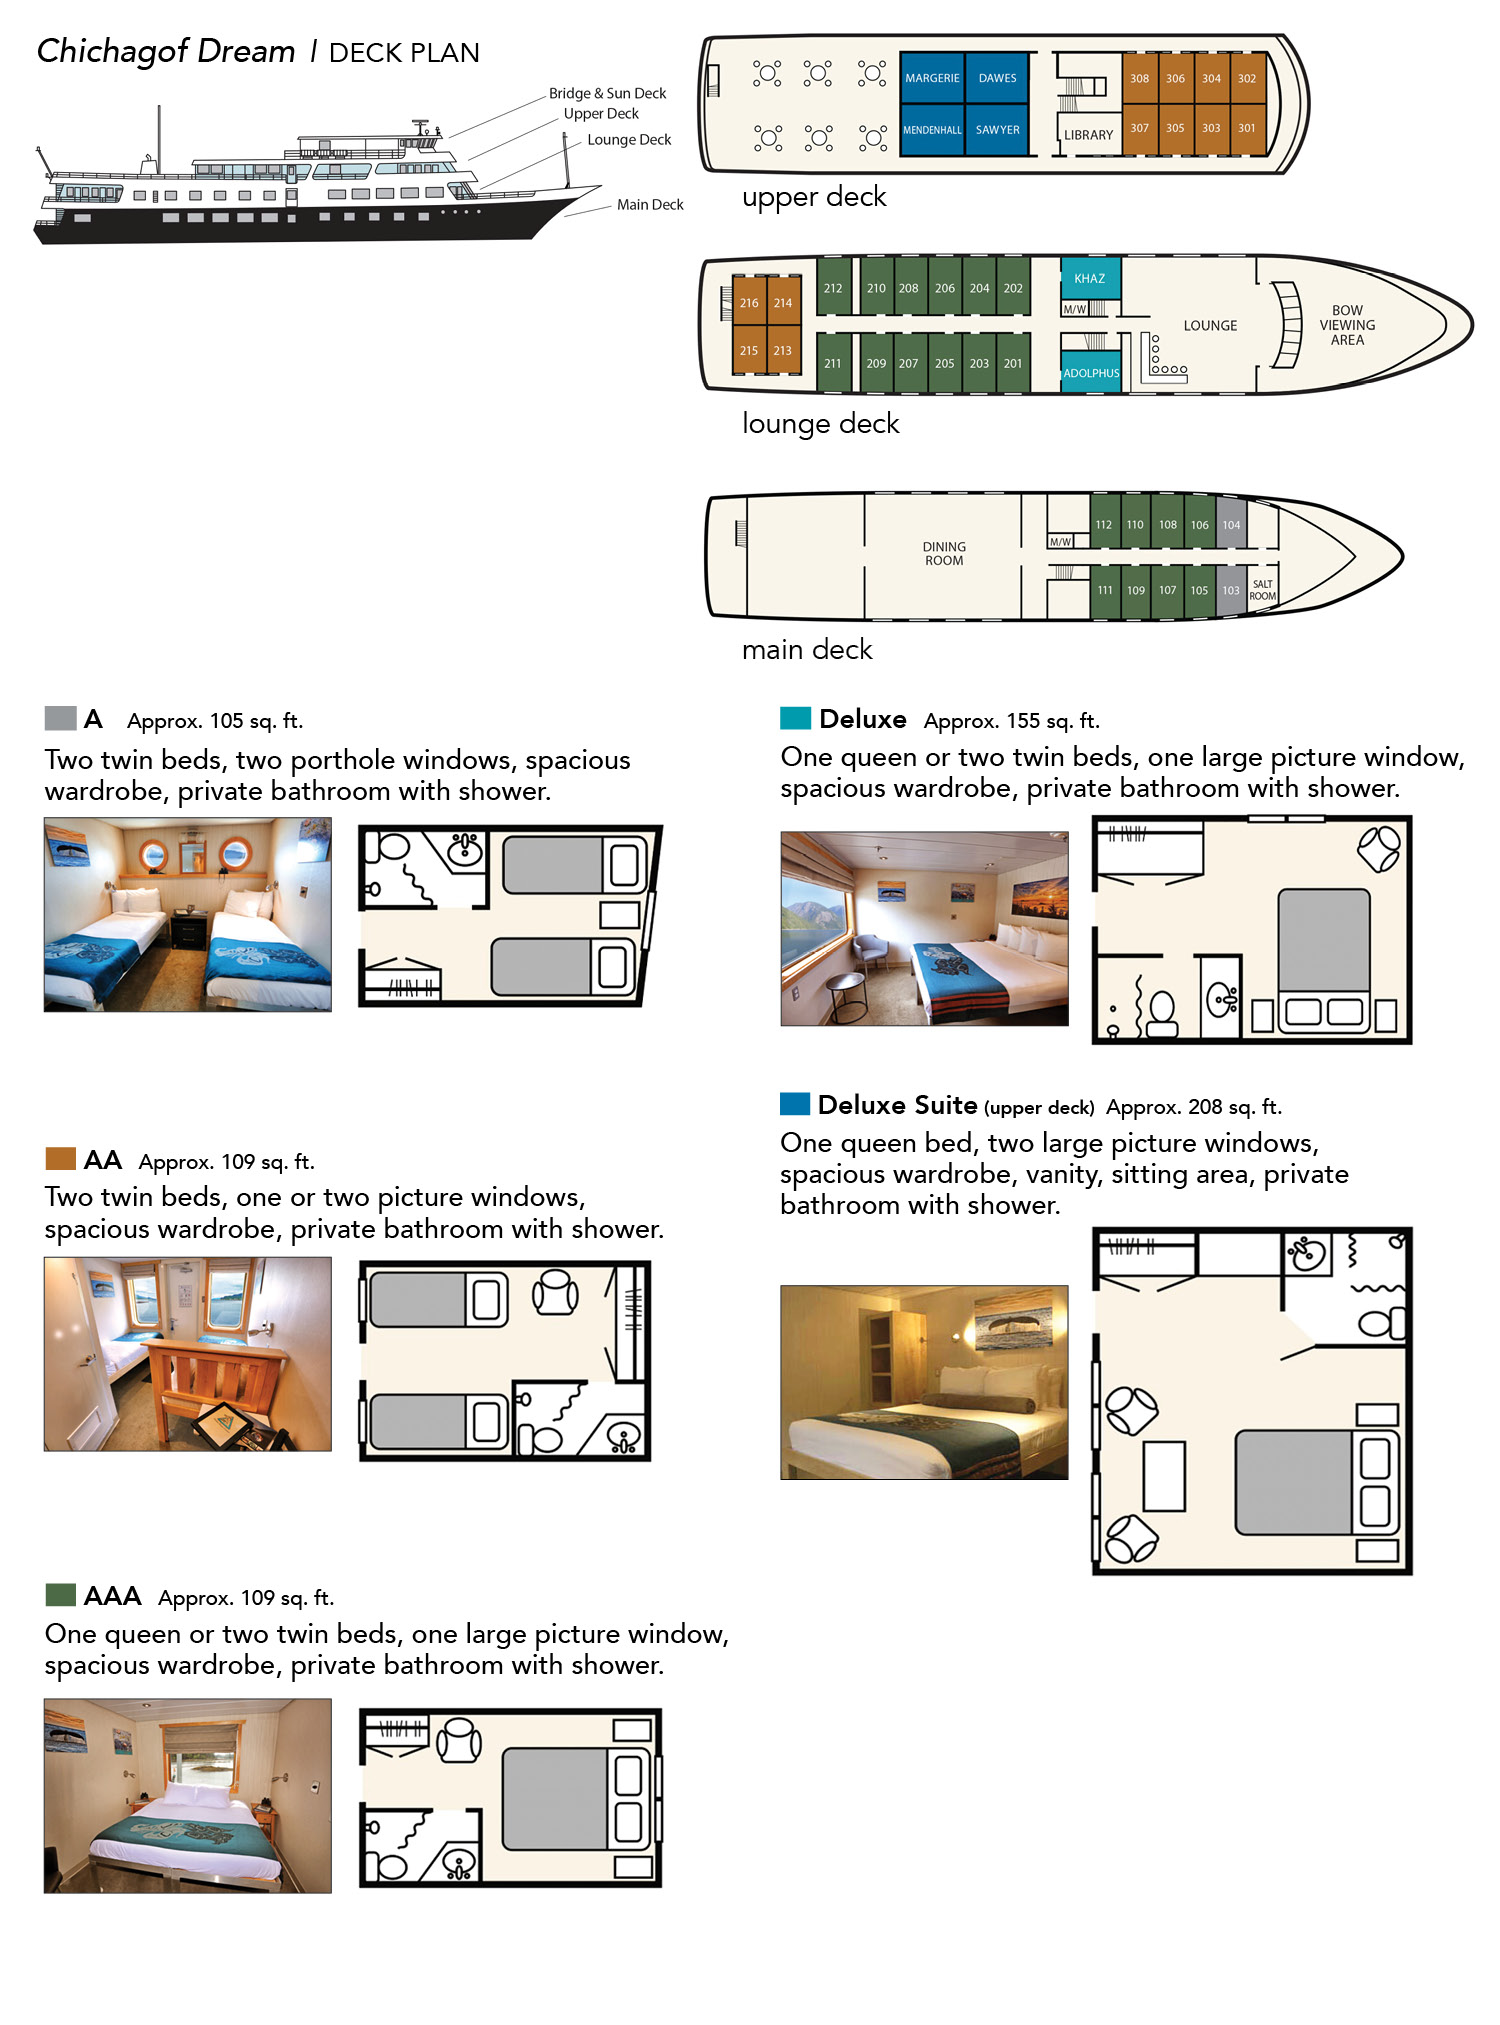 Chichagof Dream Ship Deckplan and Diagram